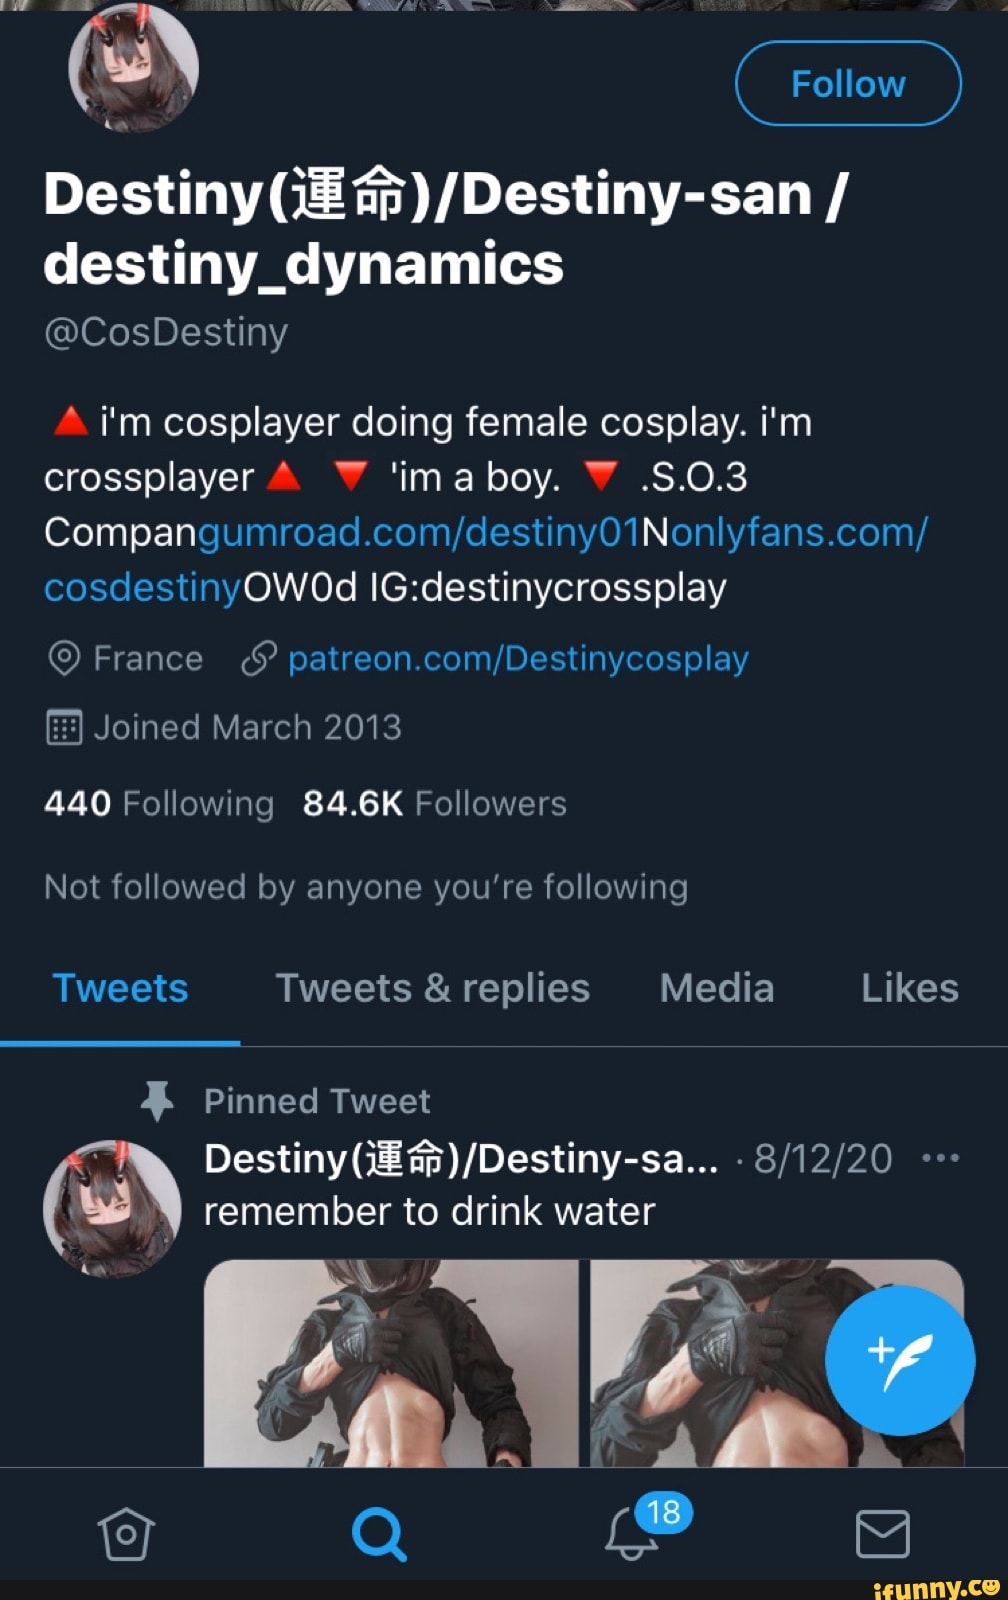 Destiny crossplay cosplay